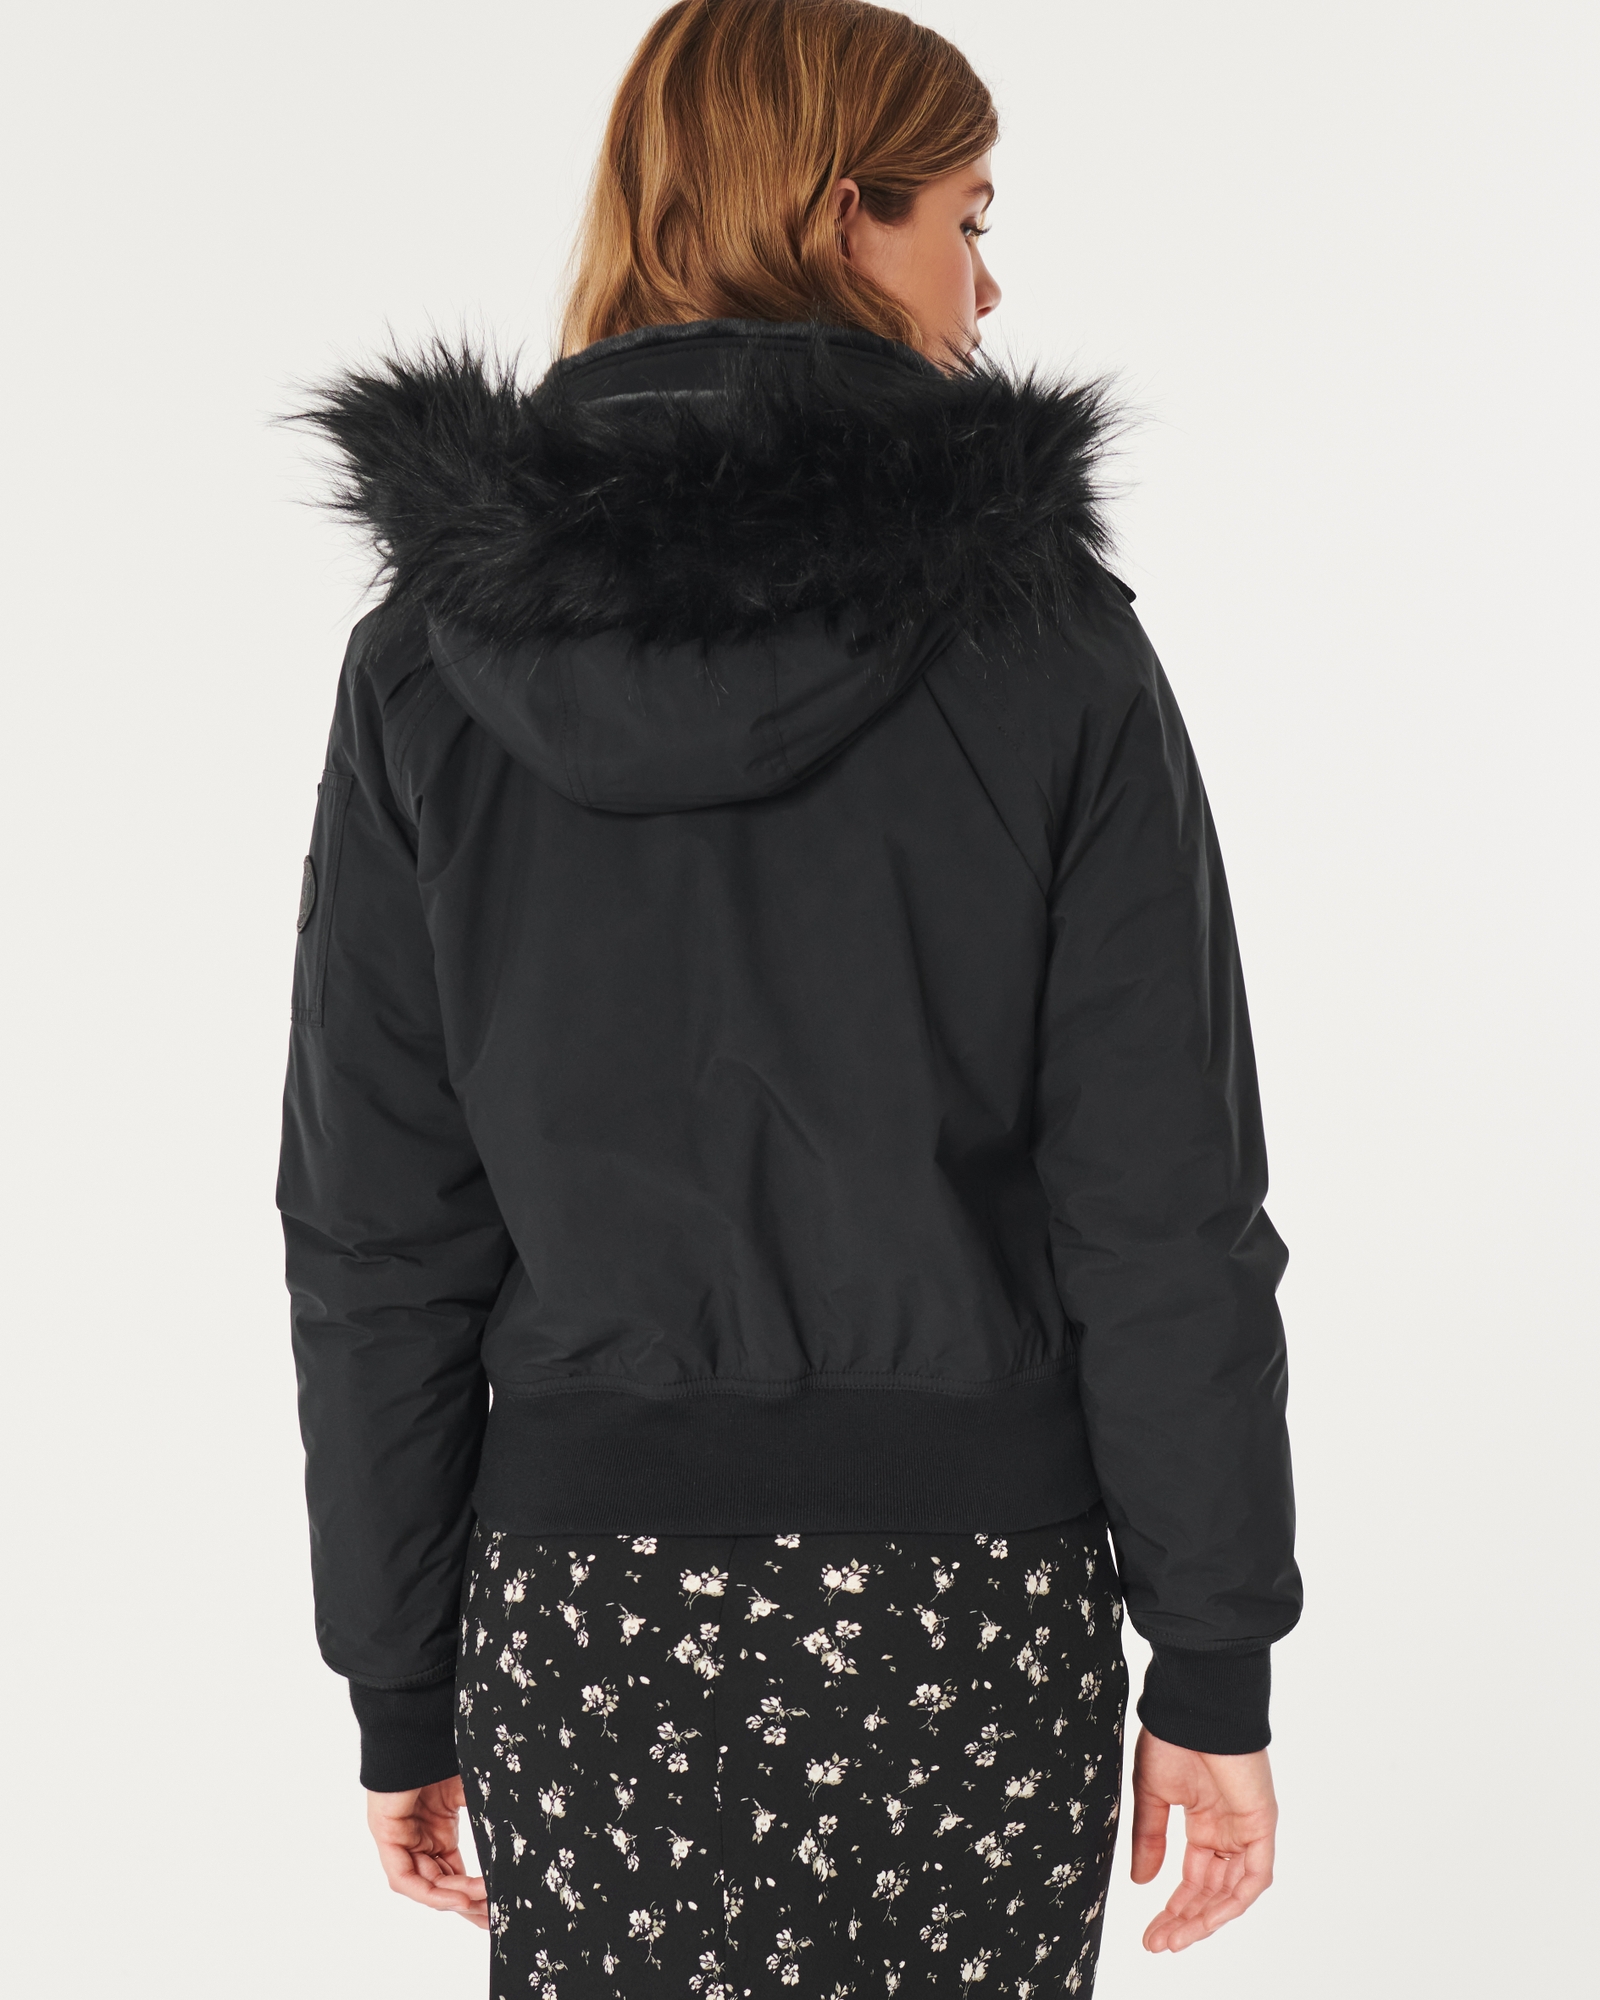 Women's All-Weather Faux Fur-Lined Jacket, Women's Select Styles On Sale